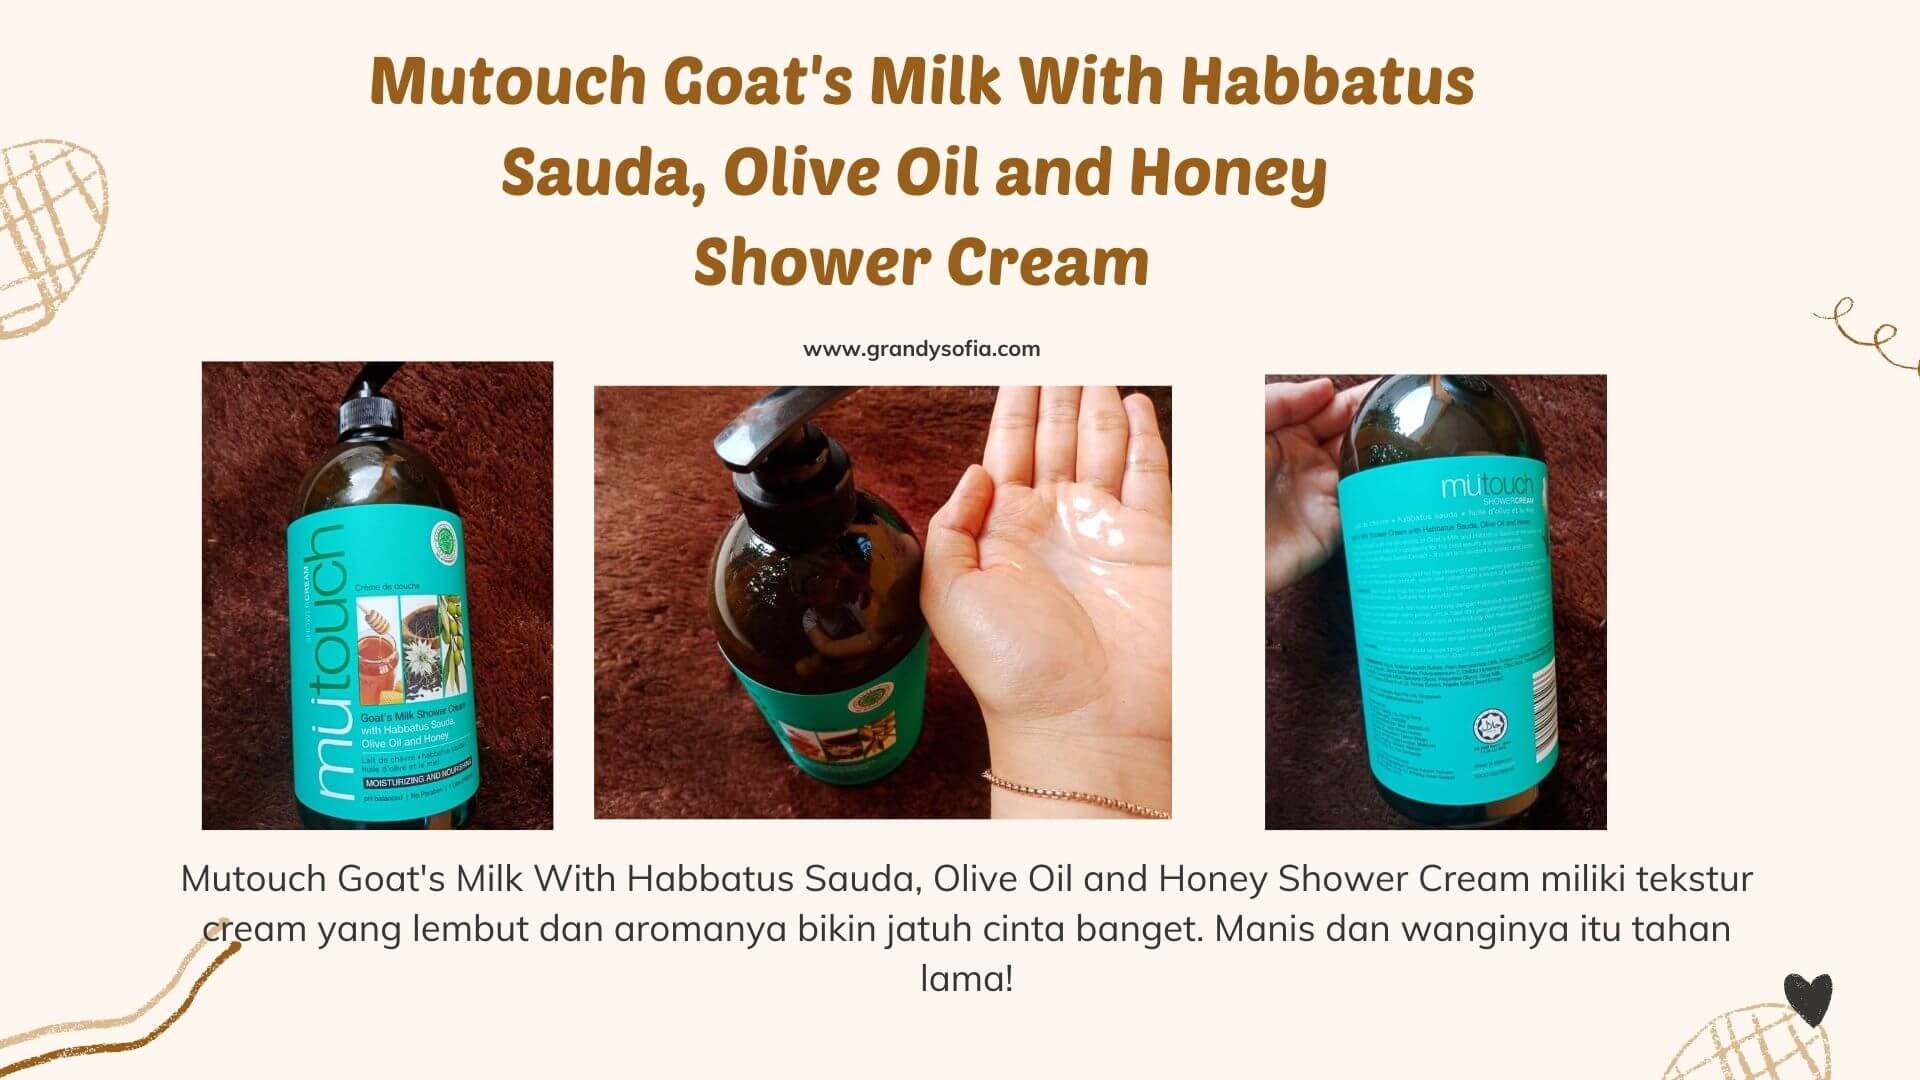 Mutouch Goat's Milk With Habbatus Sauda, Olive Oil and Honey halal produk, bodycare halal